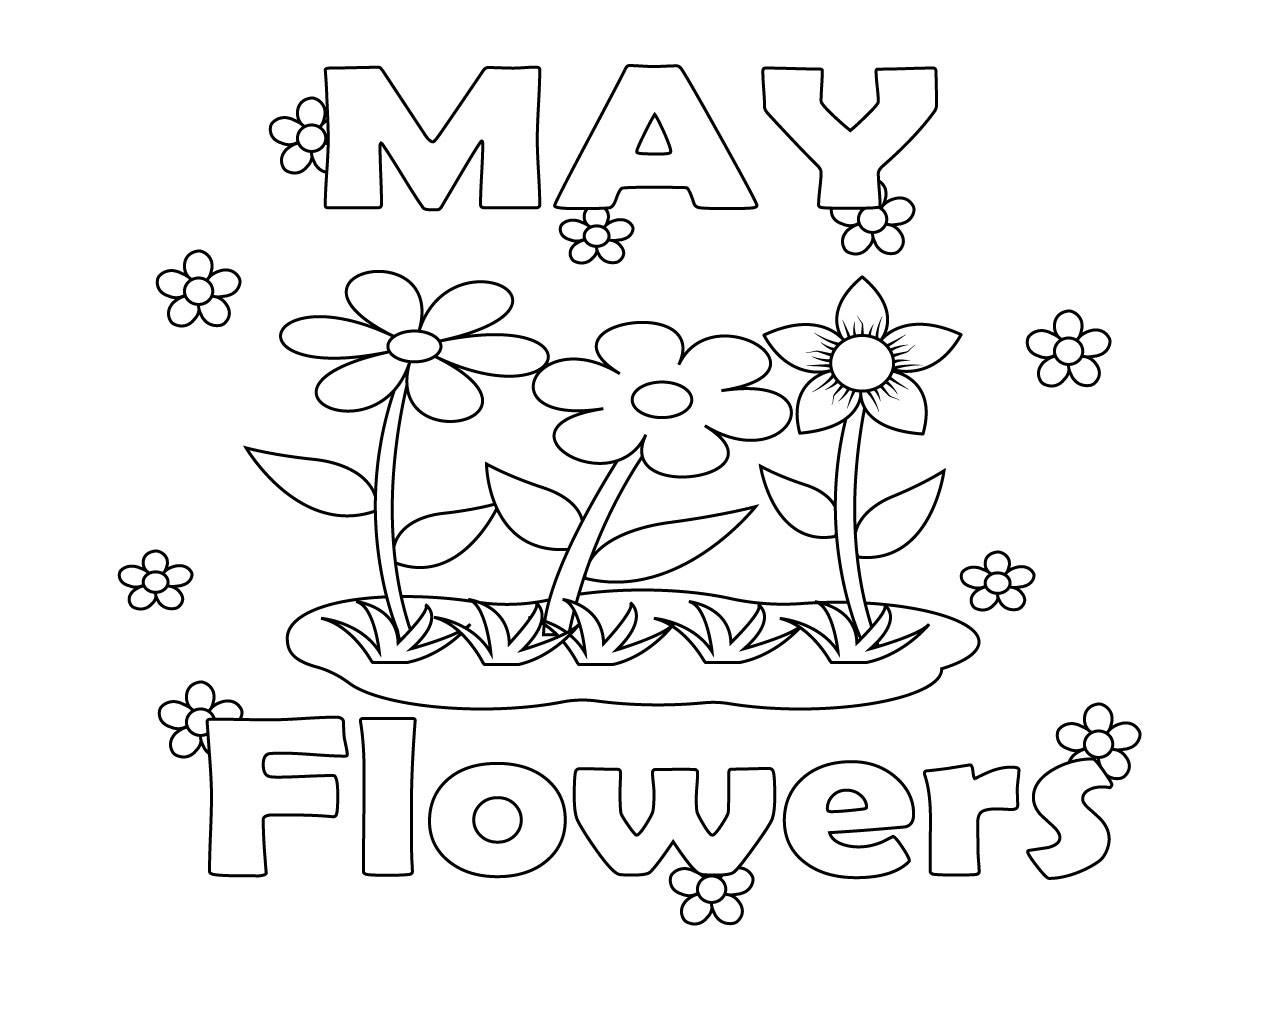 Раскраска 1 мая. 1 Мая раскраска. 1 Мая раскраски для детей. Рисунок к 1 мая для раскрашивания. Картинки для раскрашивания 1 мая.